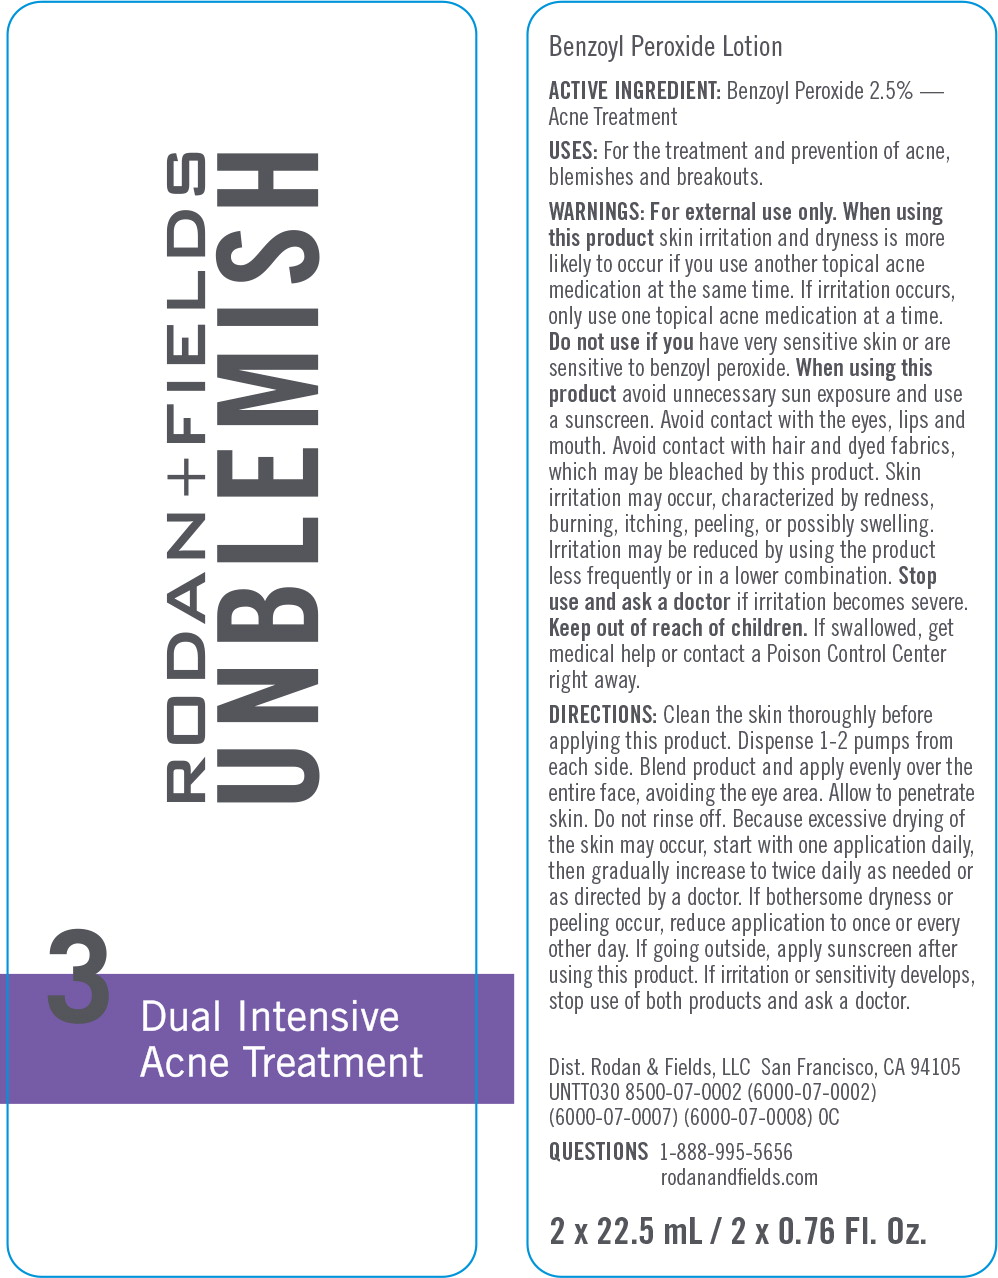 Principal Display Panel - Dual Intensive Acne Treatment Tube Label
